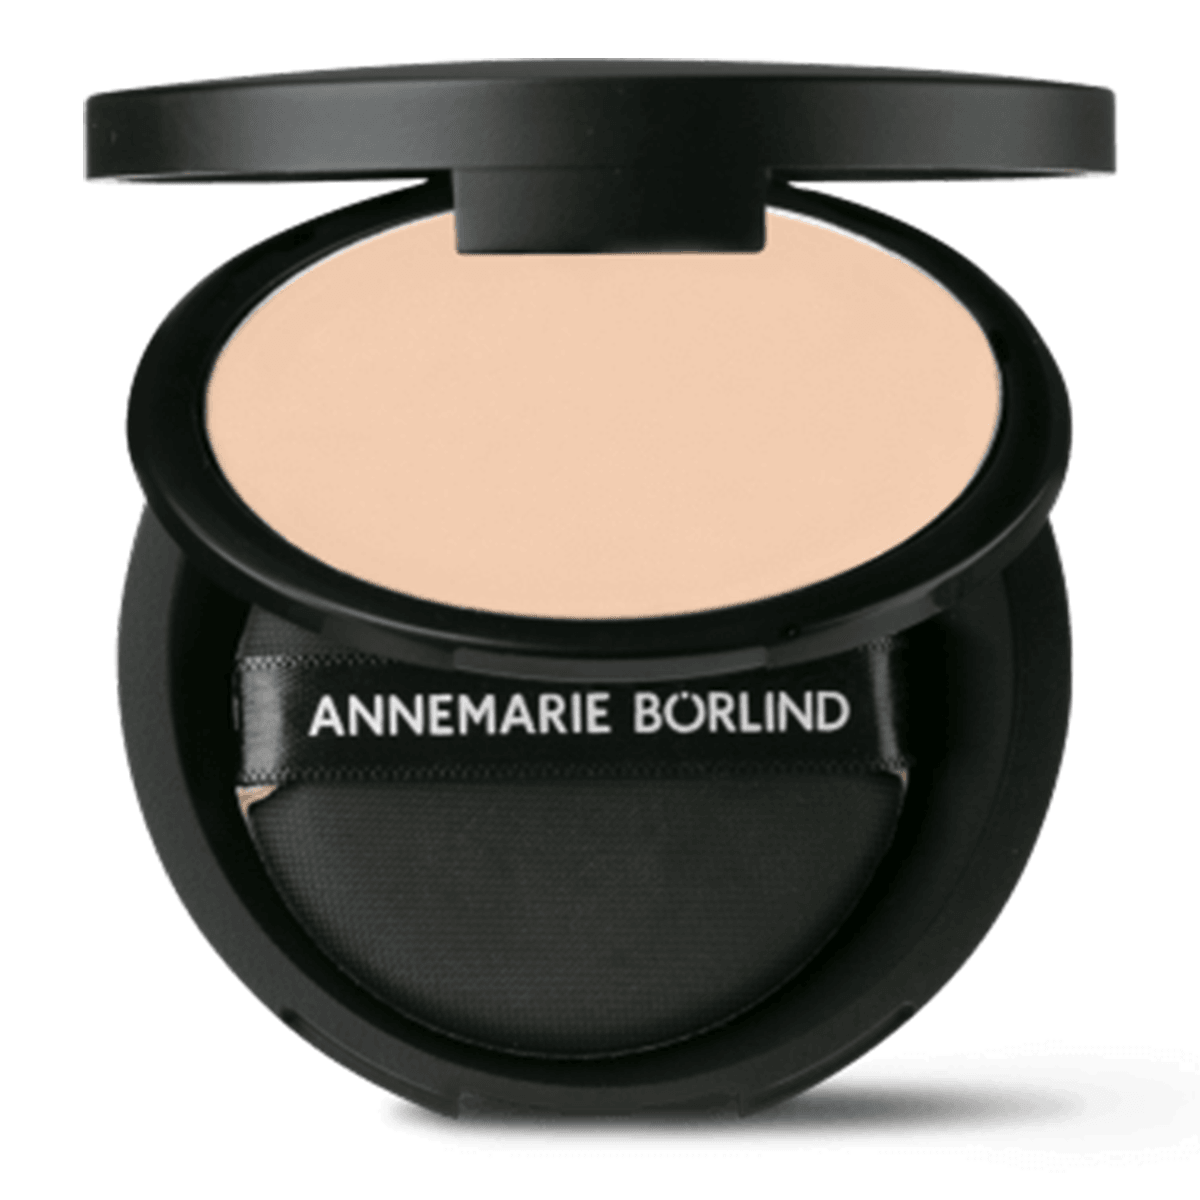 Annemarie Borlind Compact Make-Up Ivory 10g Cosmetics - Makeup at Village Vitamin Store